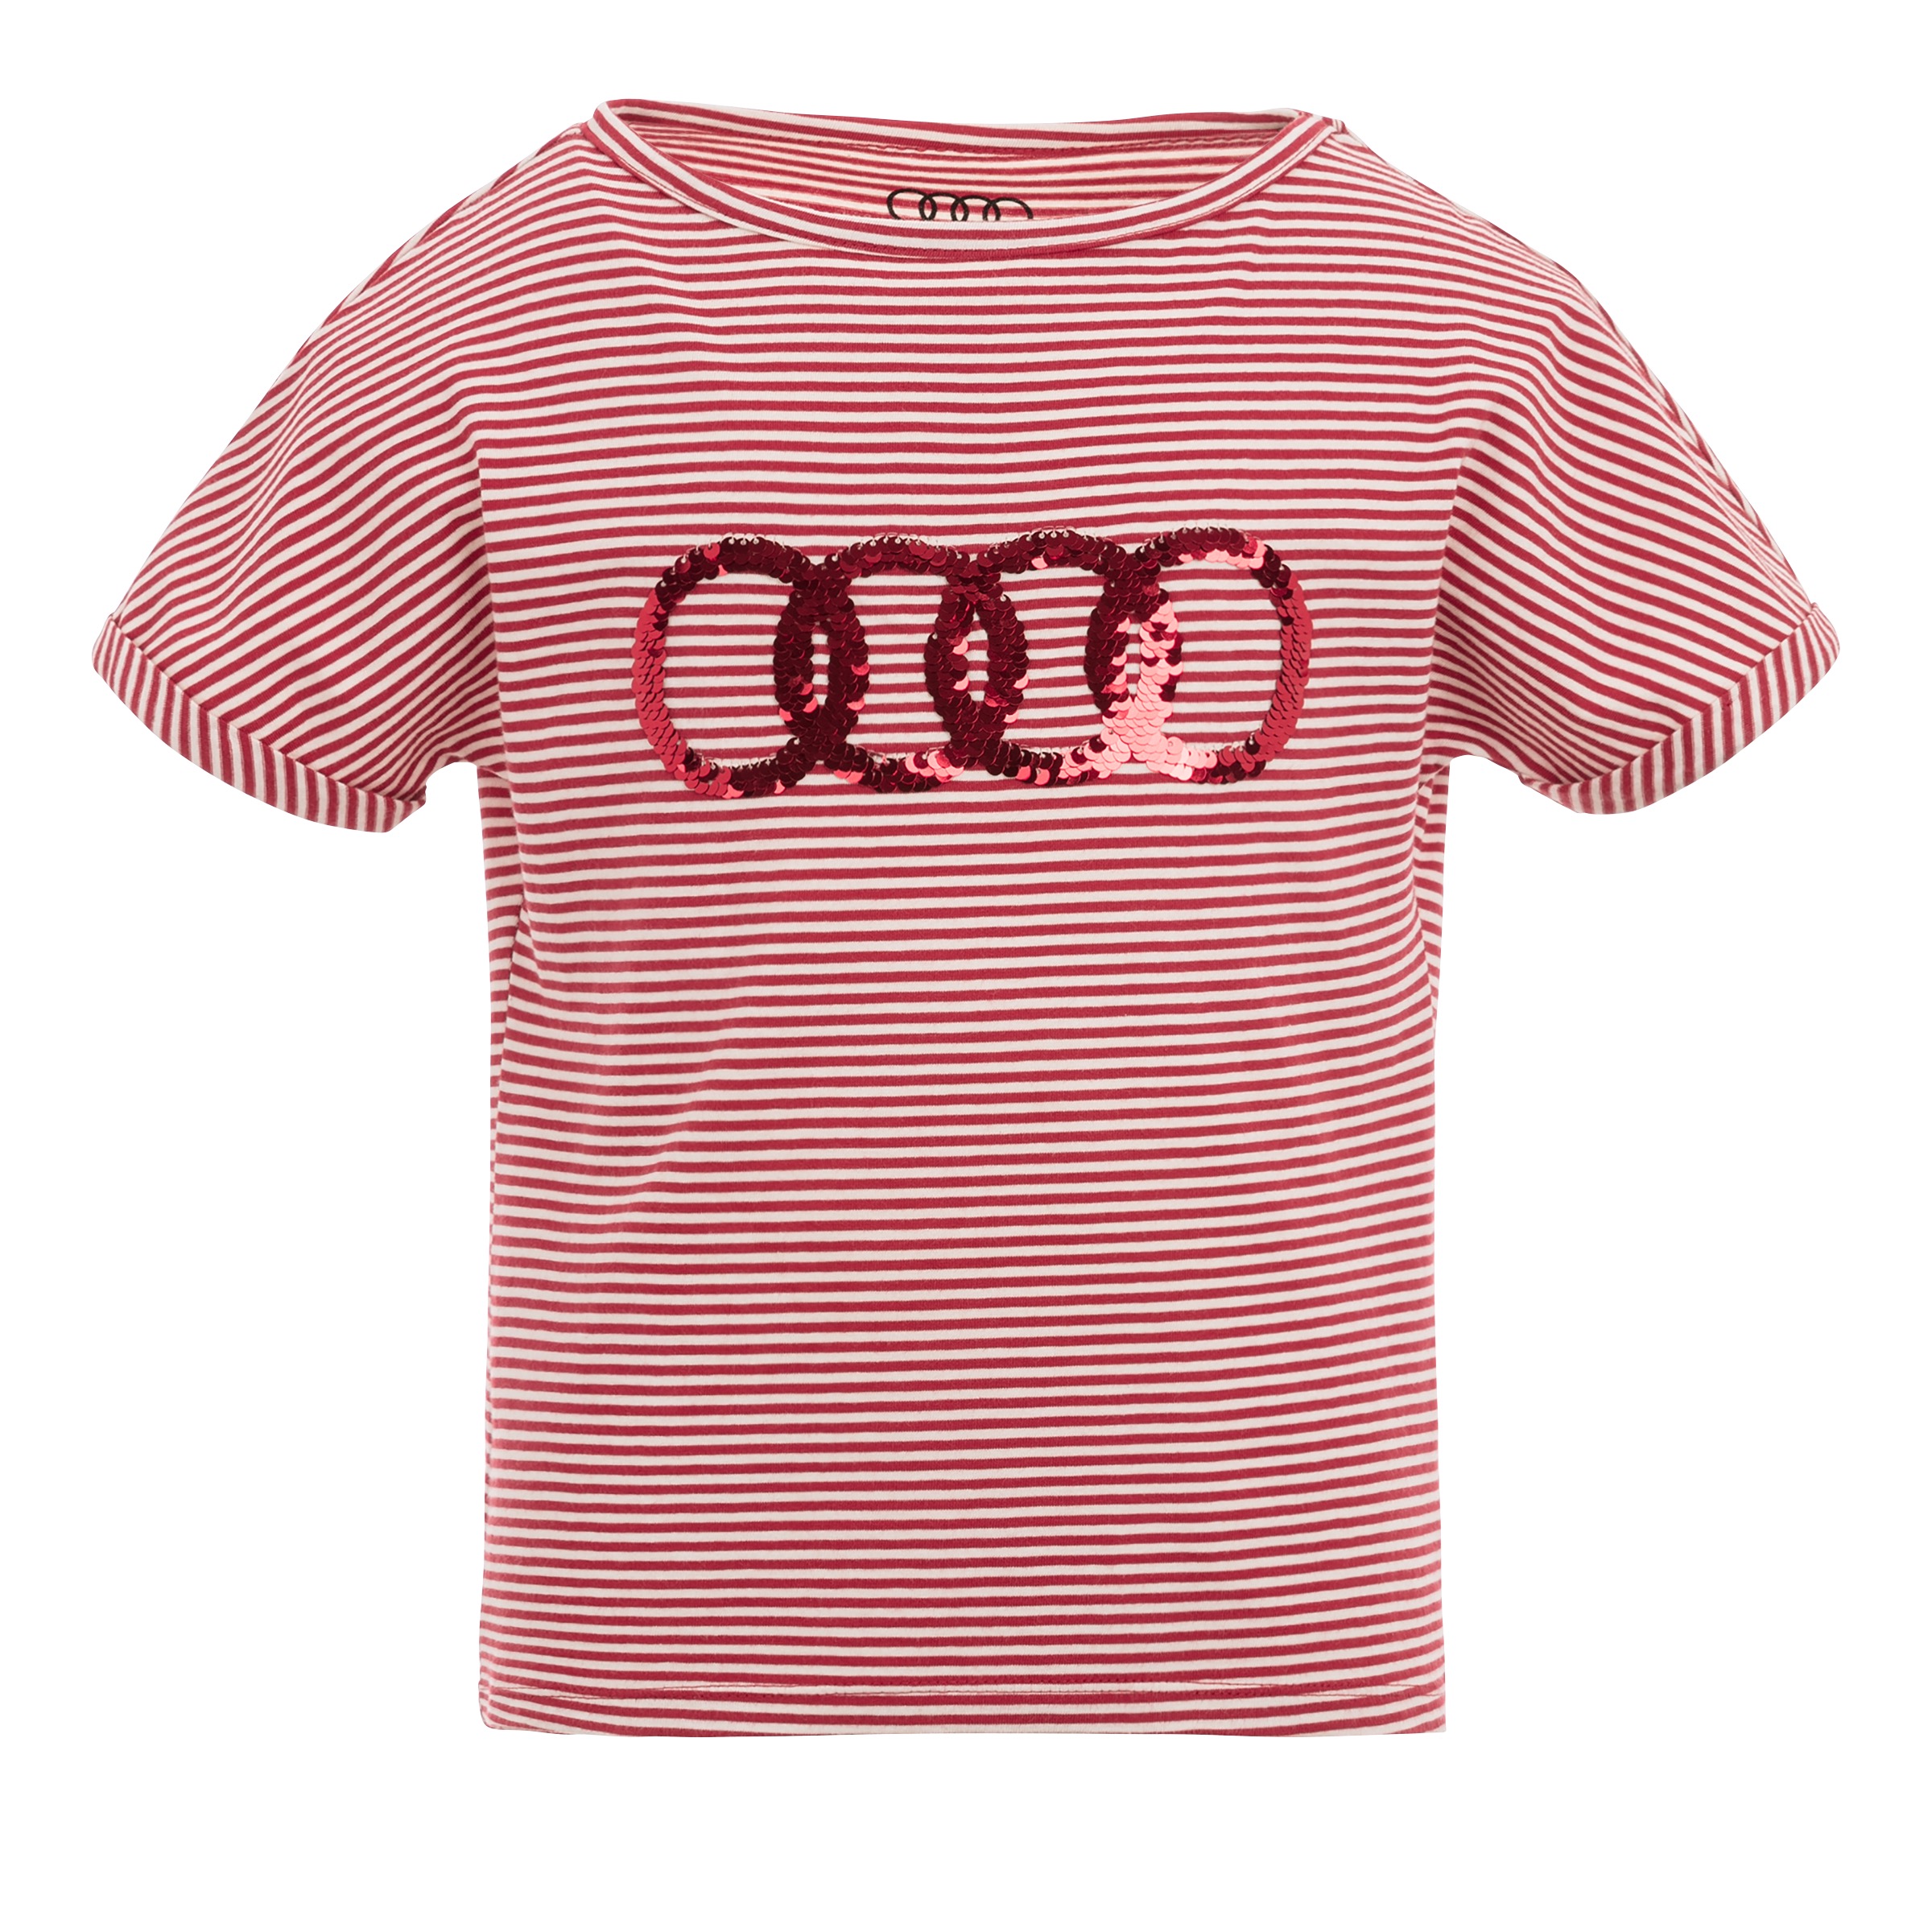 Audi Shirt Mädchen, Kinder, rot/weiß